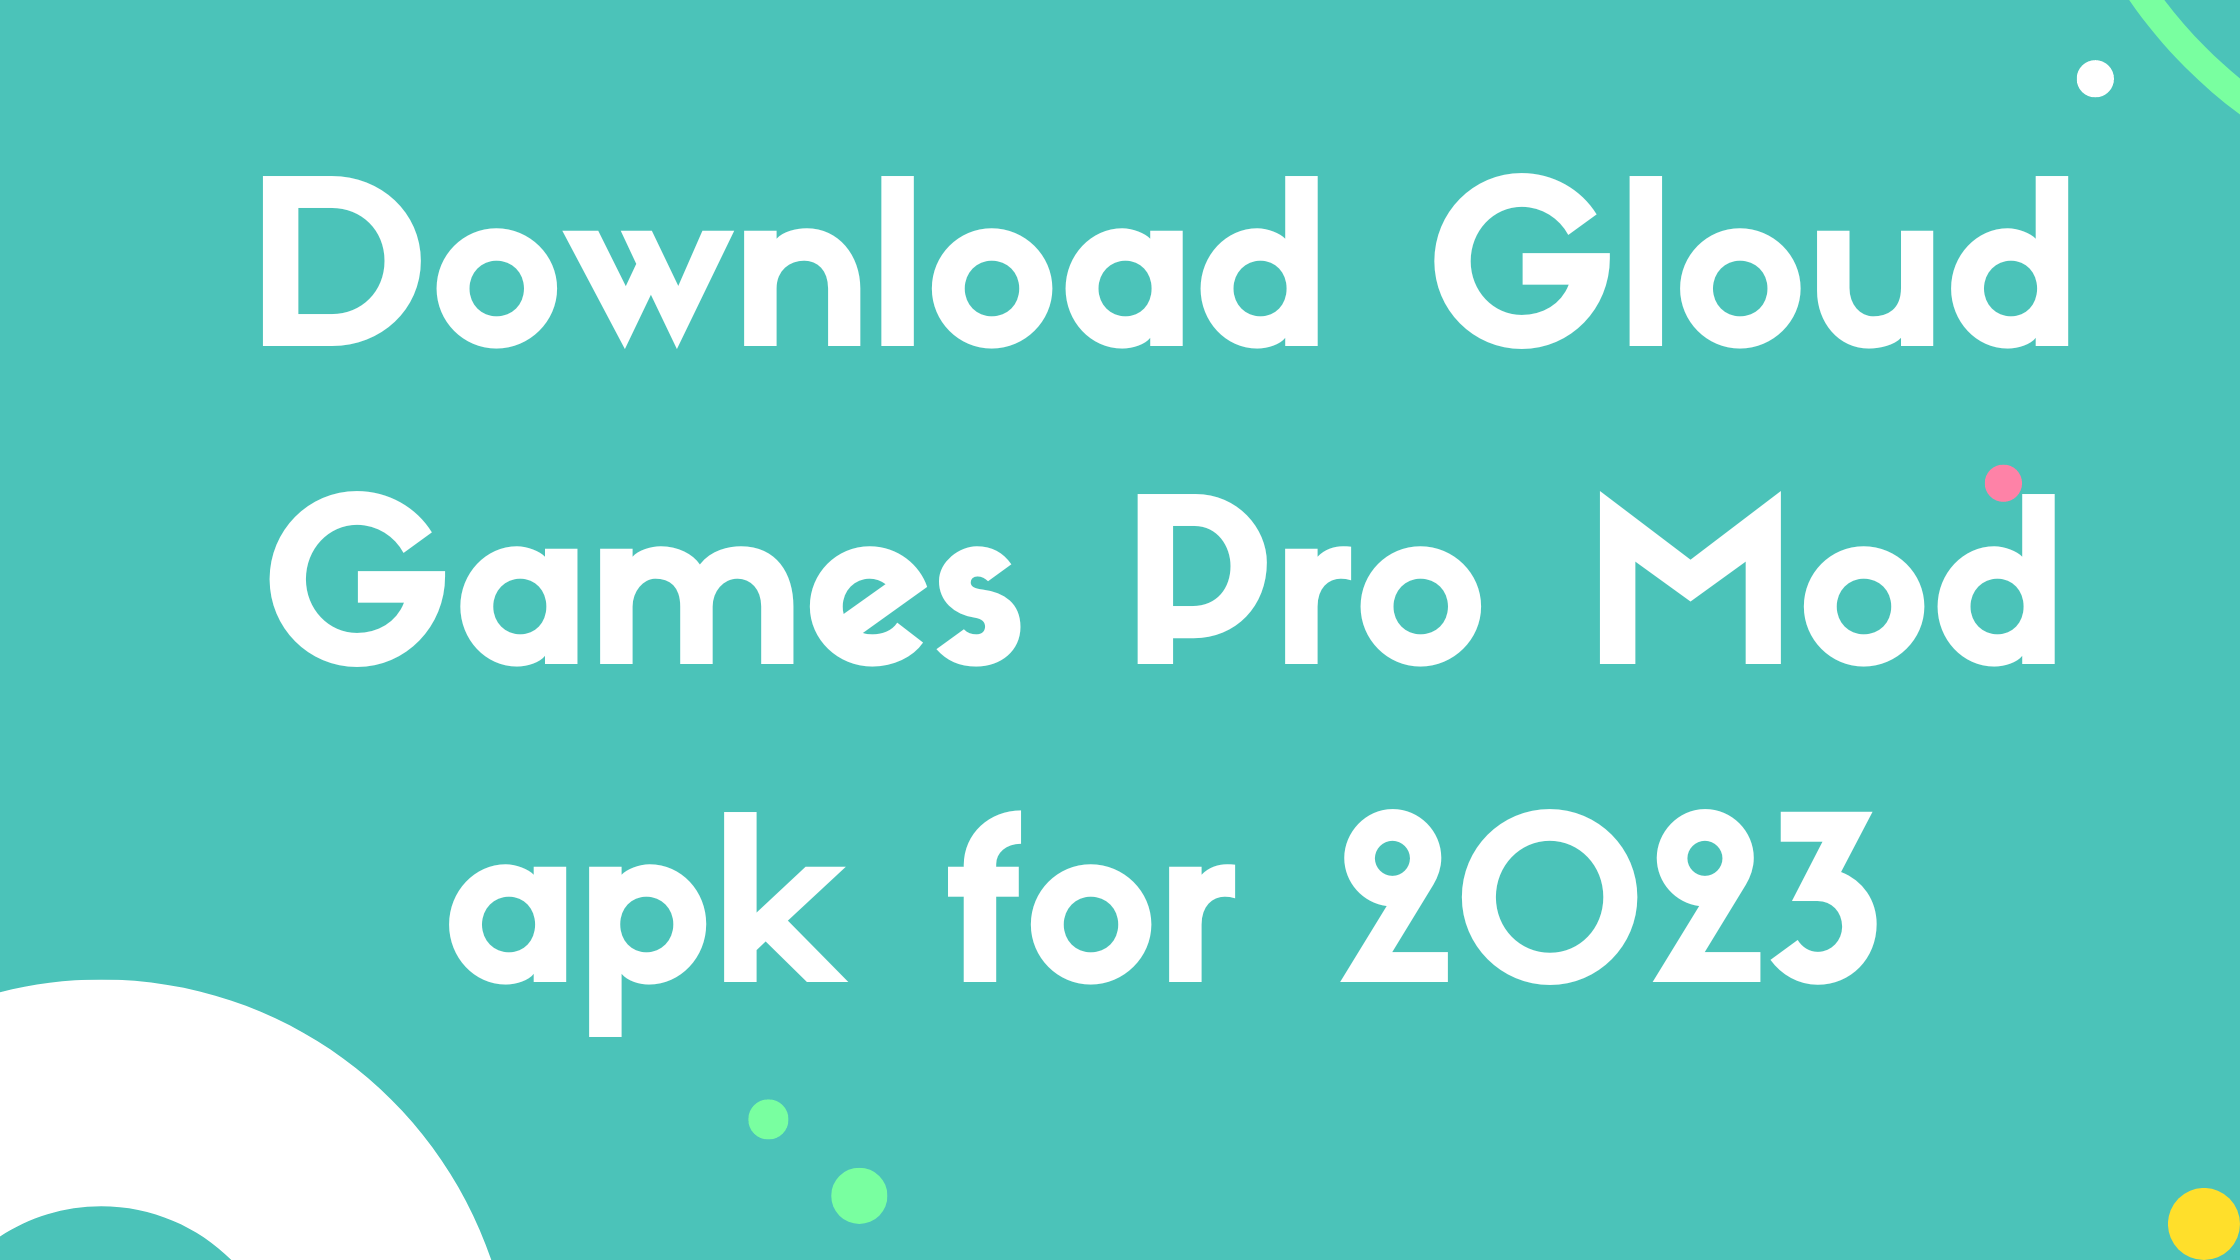 Download Gloud Games Pro Mod apk for 2023